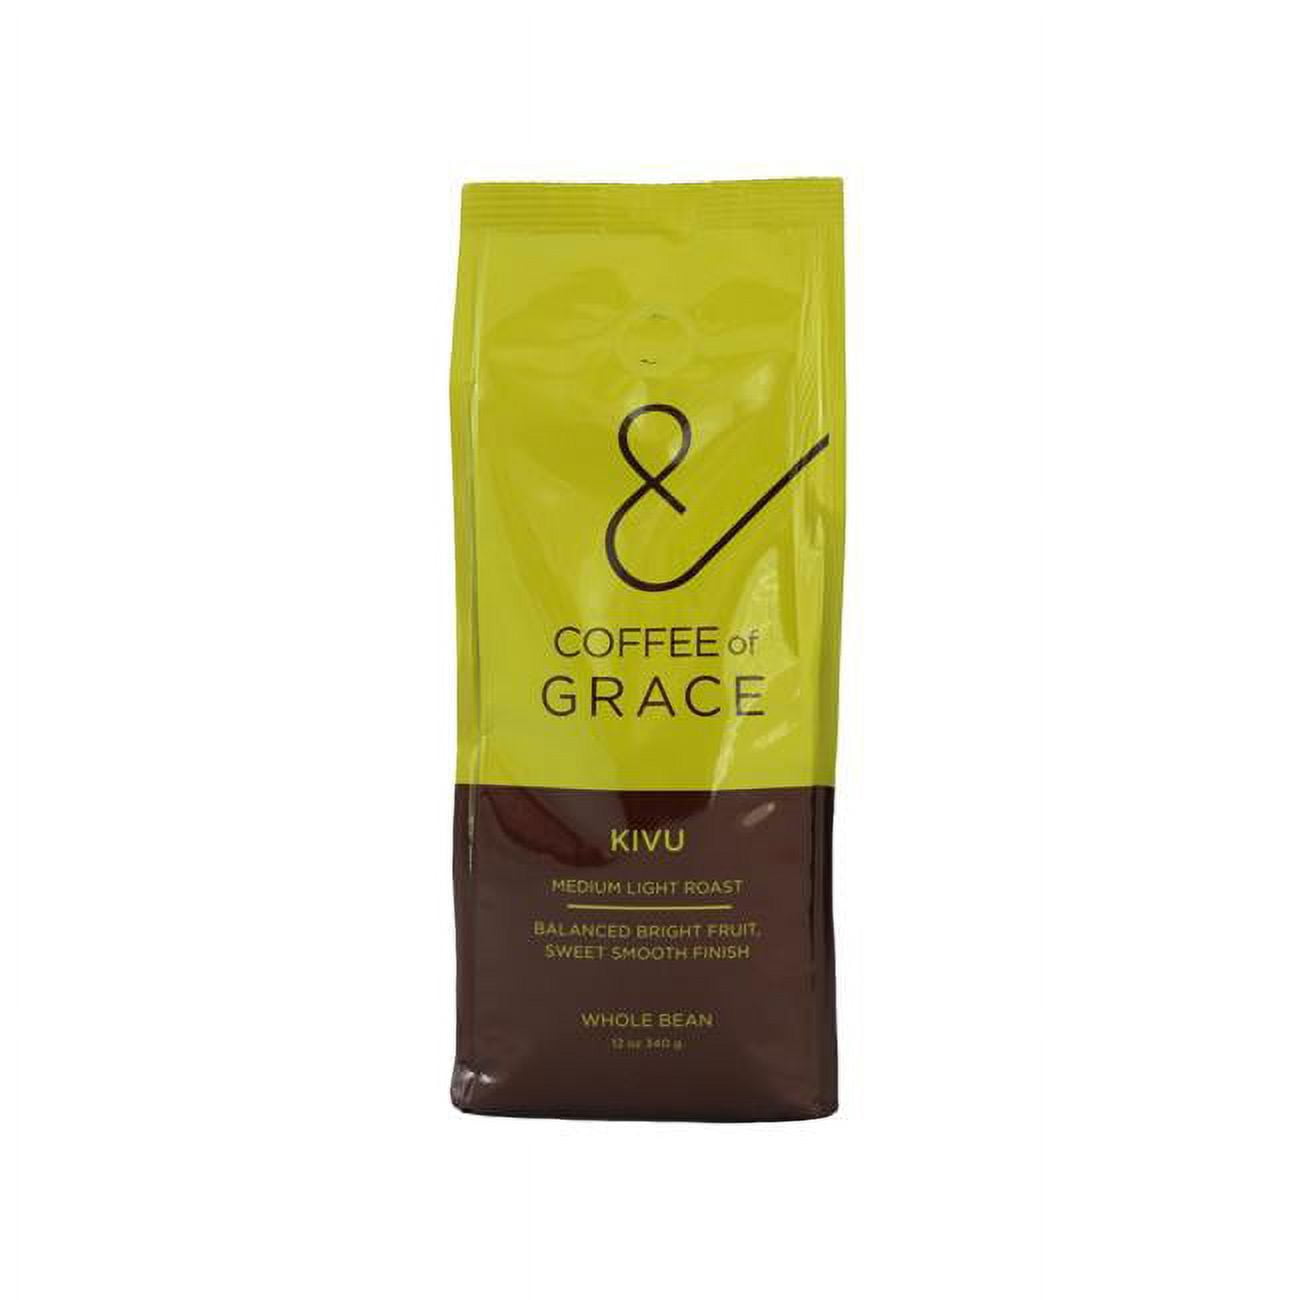 Picture of Coffee of Grace 21 12 oz Kivu Medium Light Roast Coffee